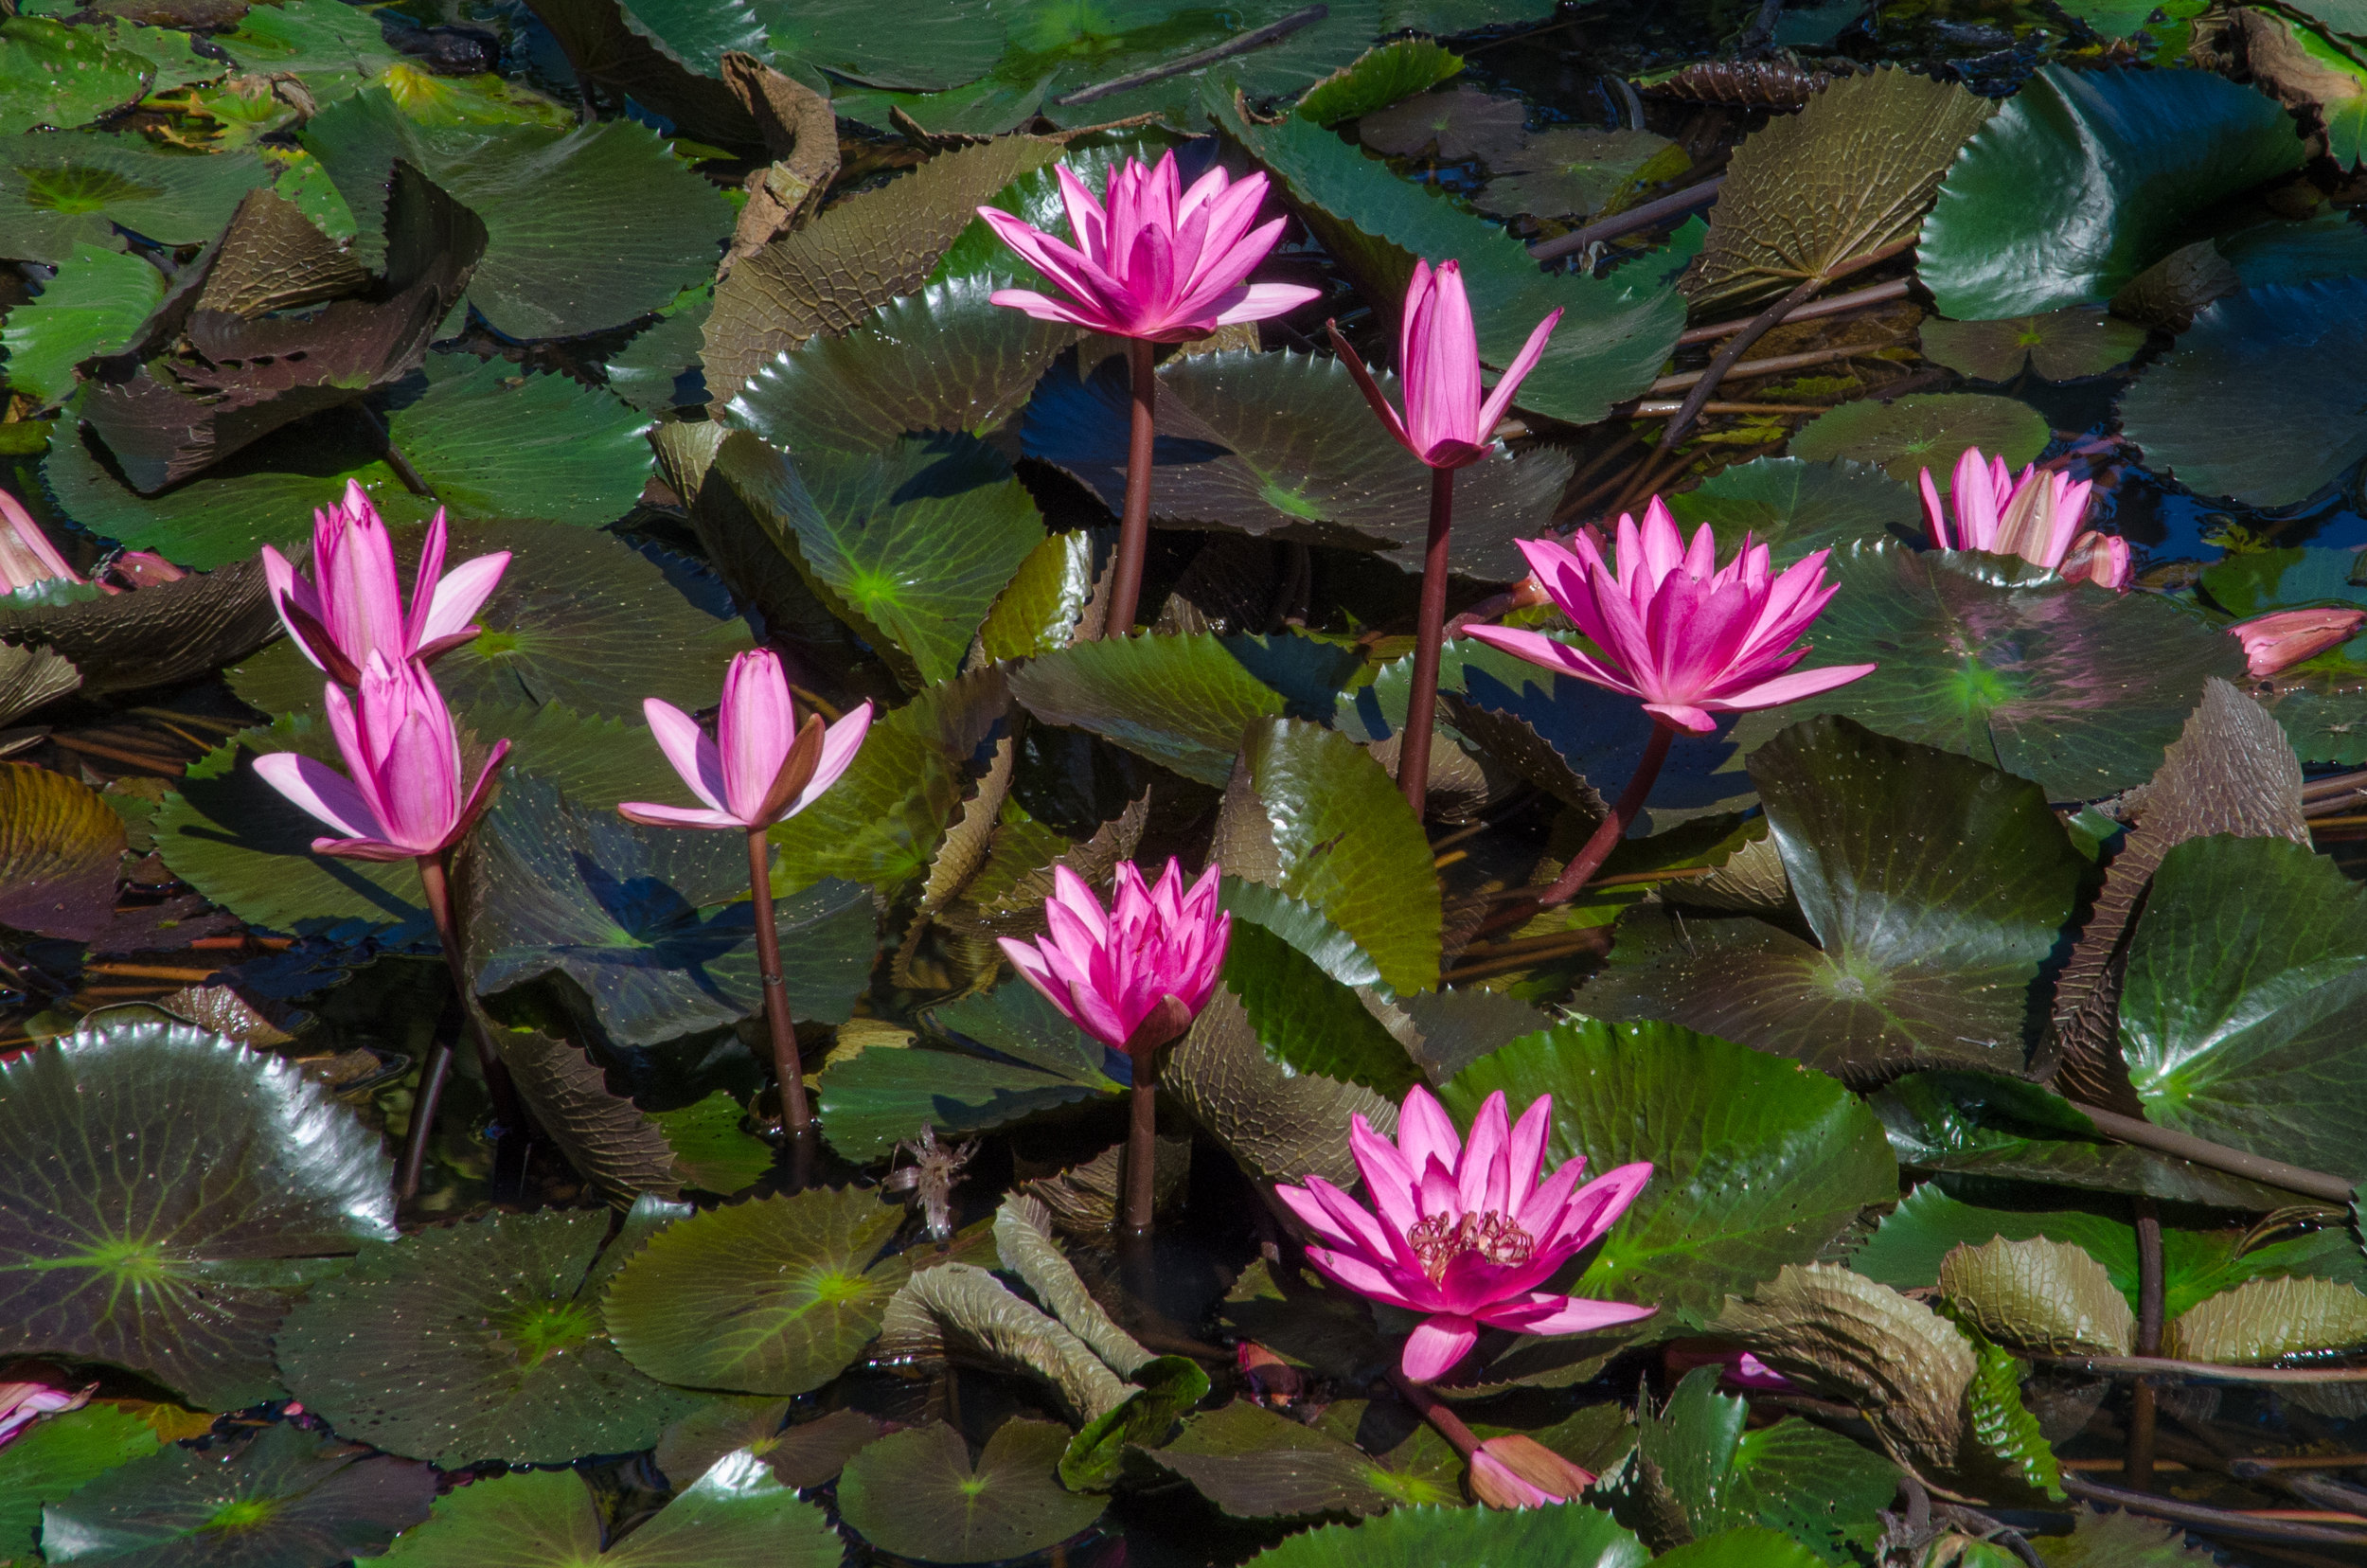 Lotus flowers, National Museum complex, Luang Prabang, Laos